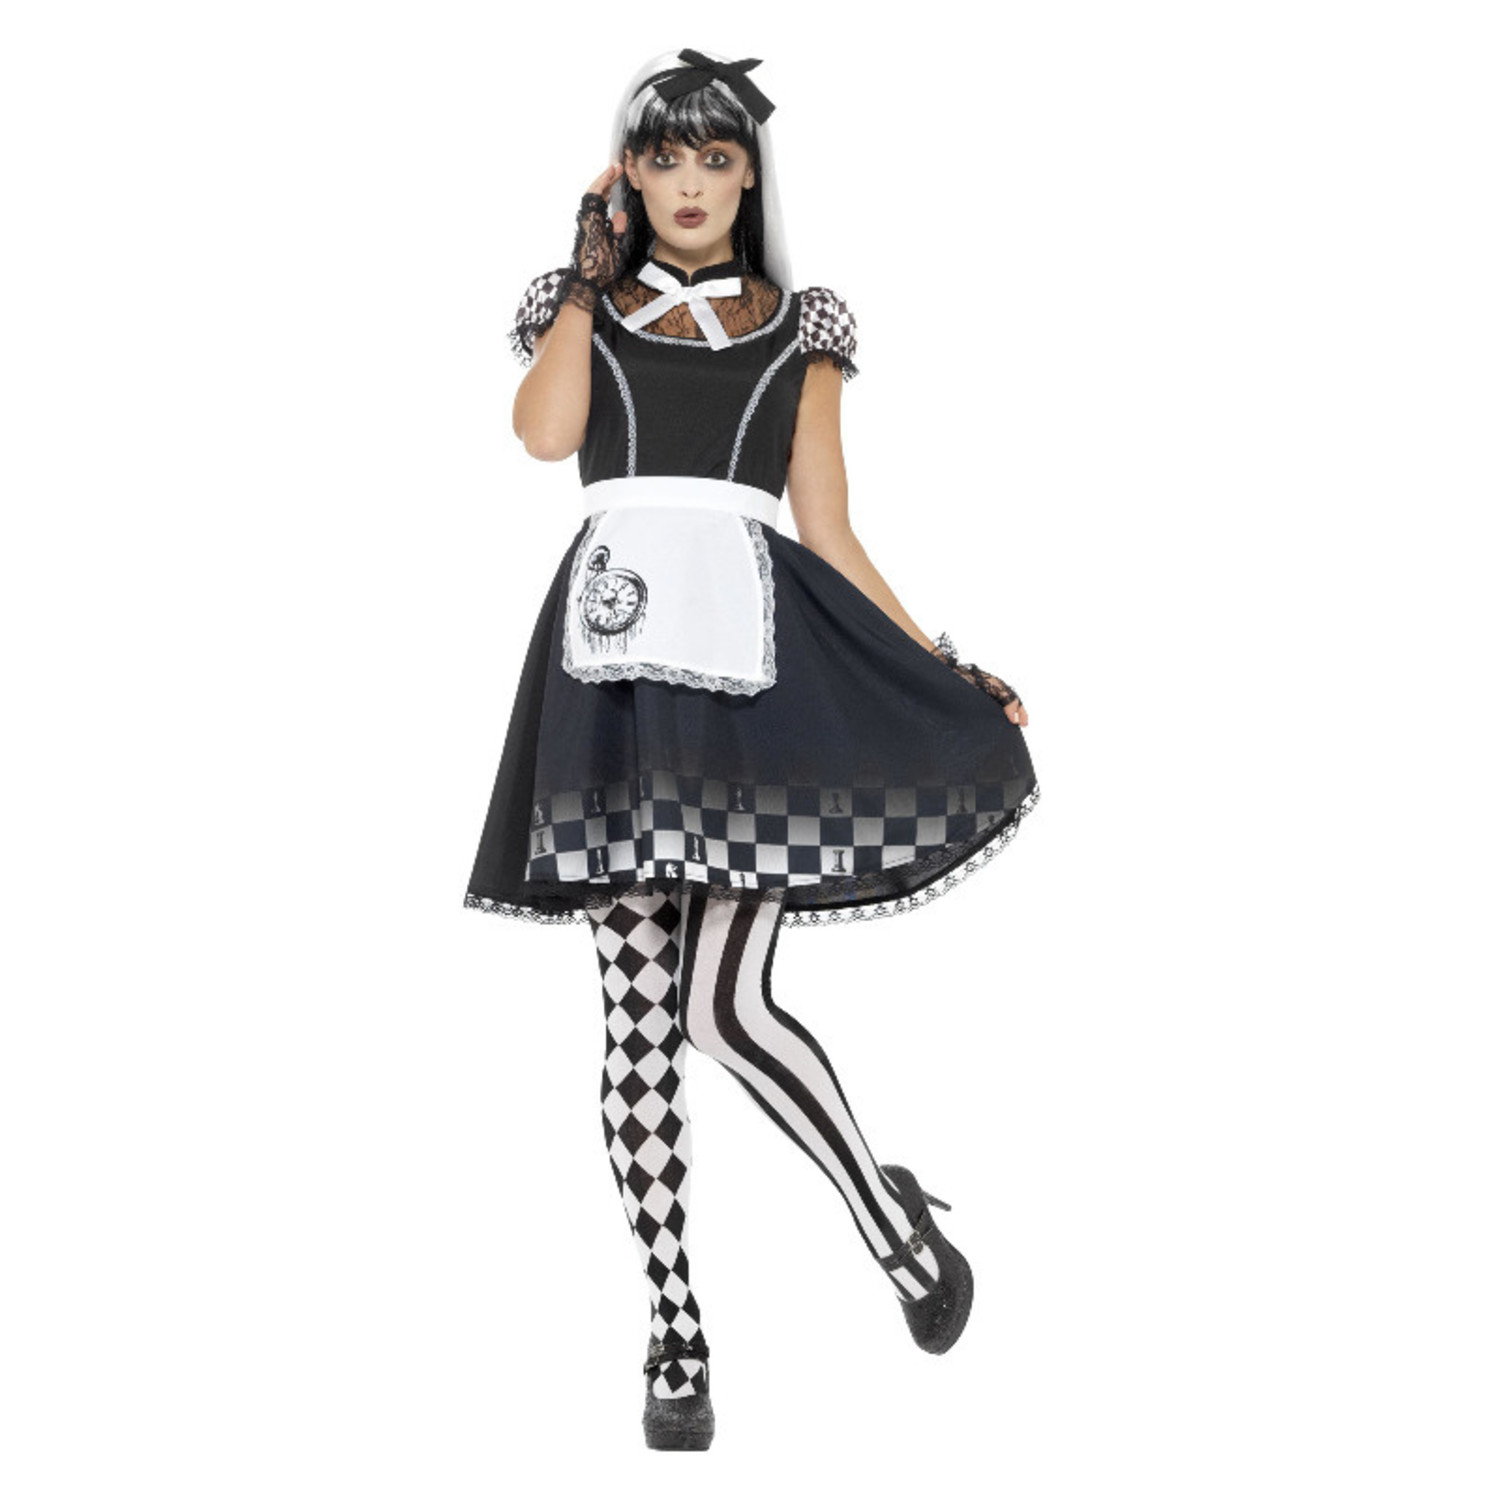 Horen van bestrating Uitsluiting Ruig Gothic Alice kostuum in zwart wit - e-Carnavalskleding